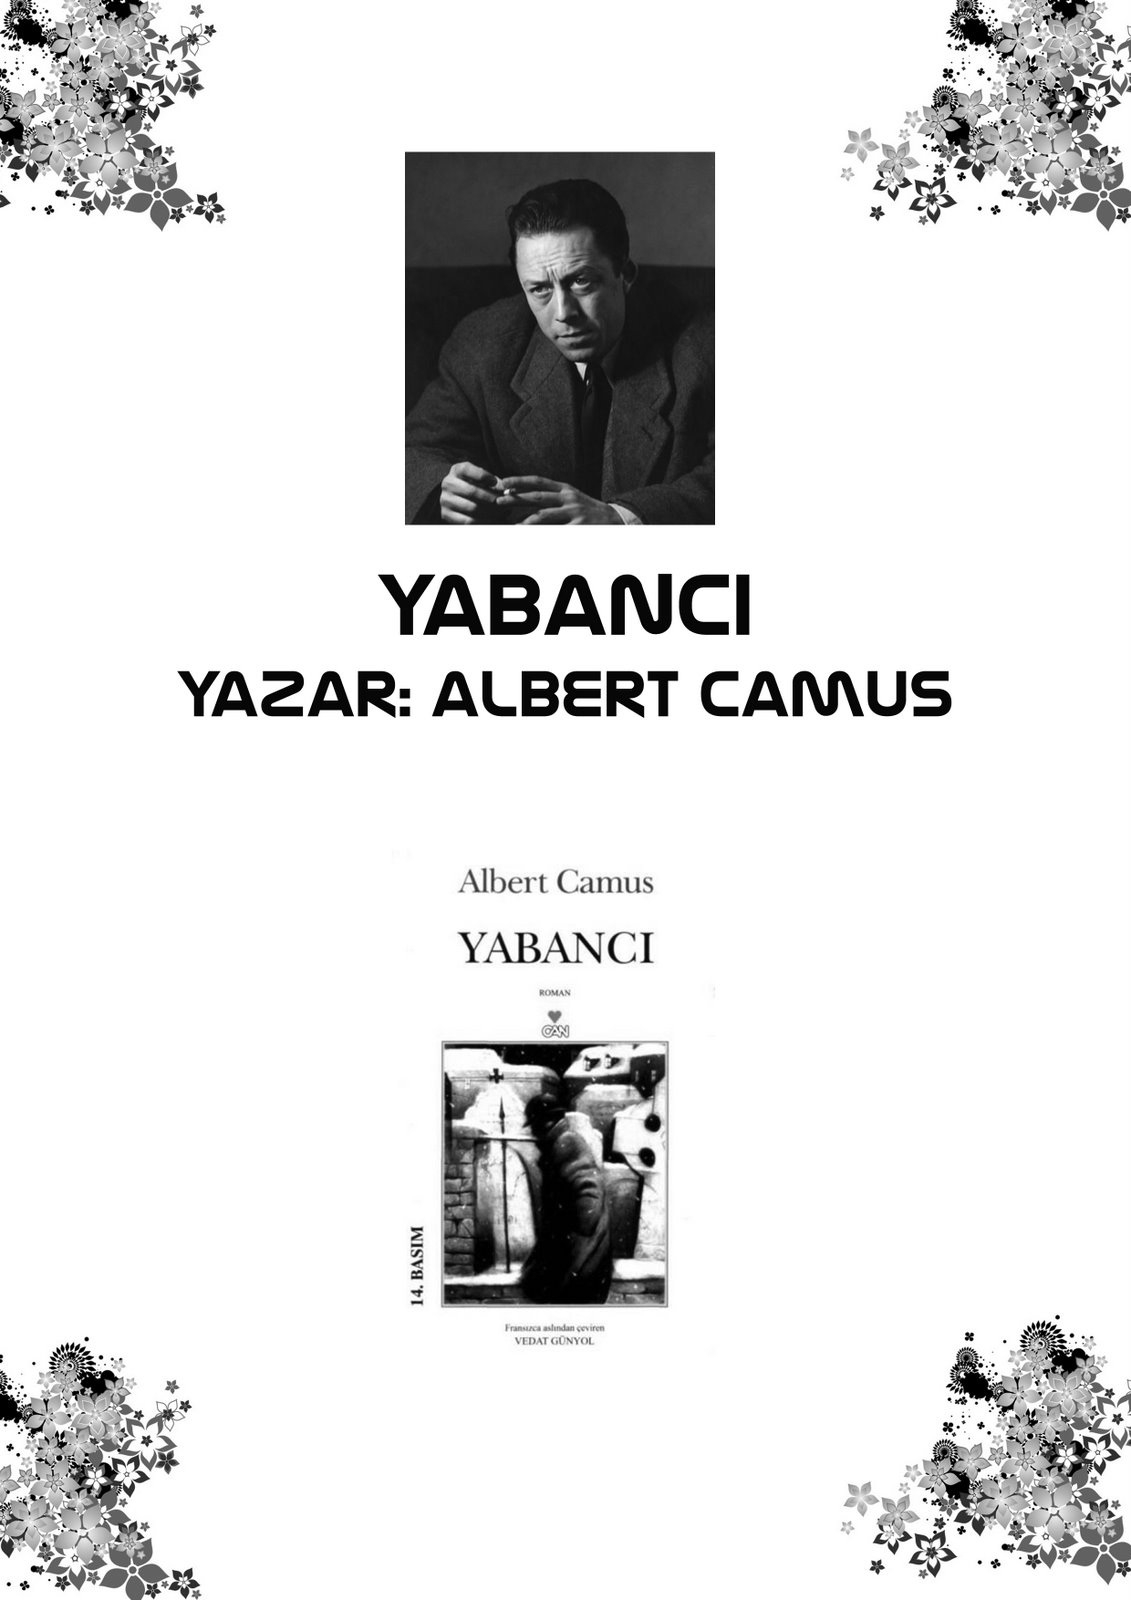 [YABANCi_+albert+camus.jpg]